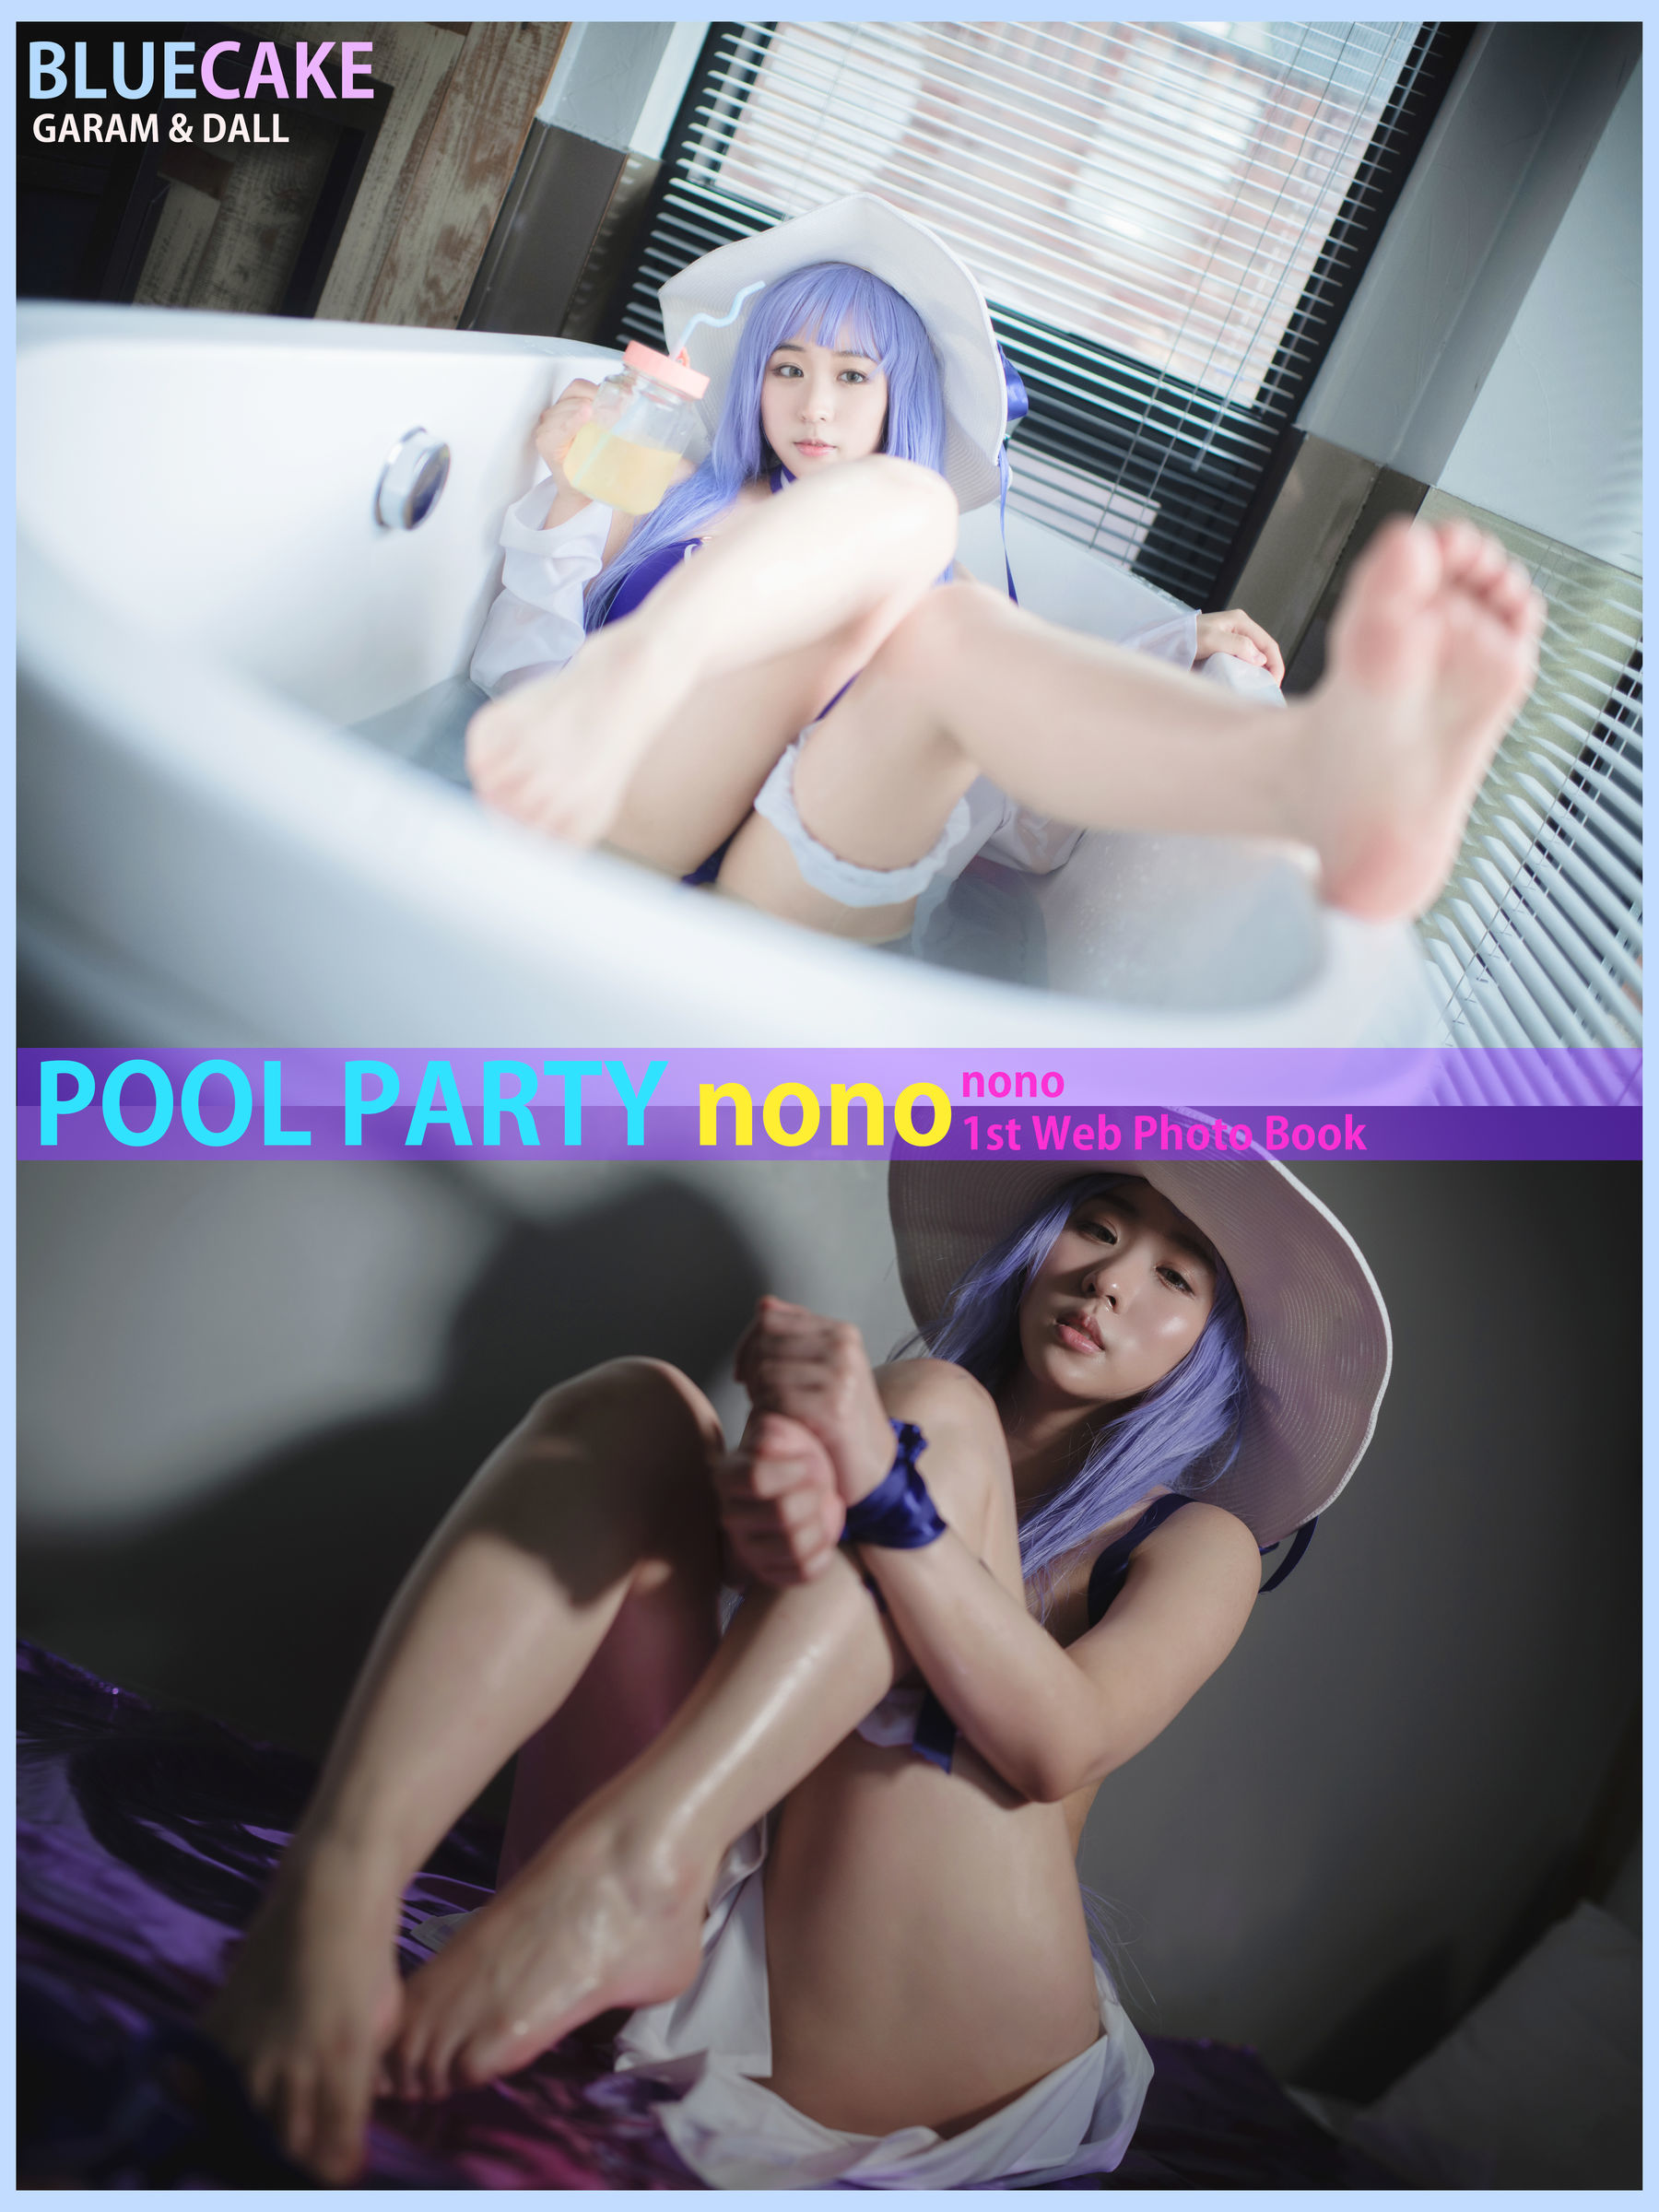 [BLUECAKE] Nono - Pool Party Caitlyn